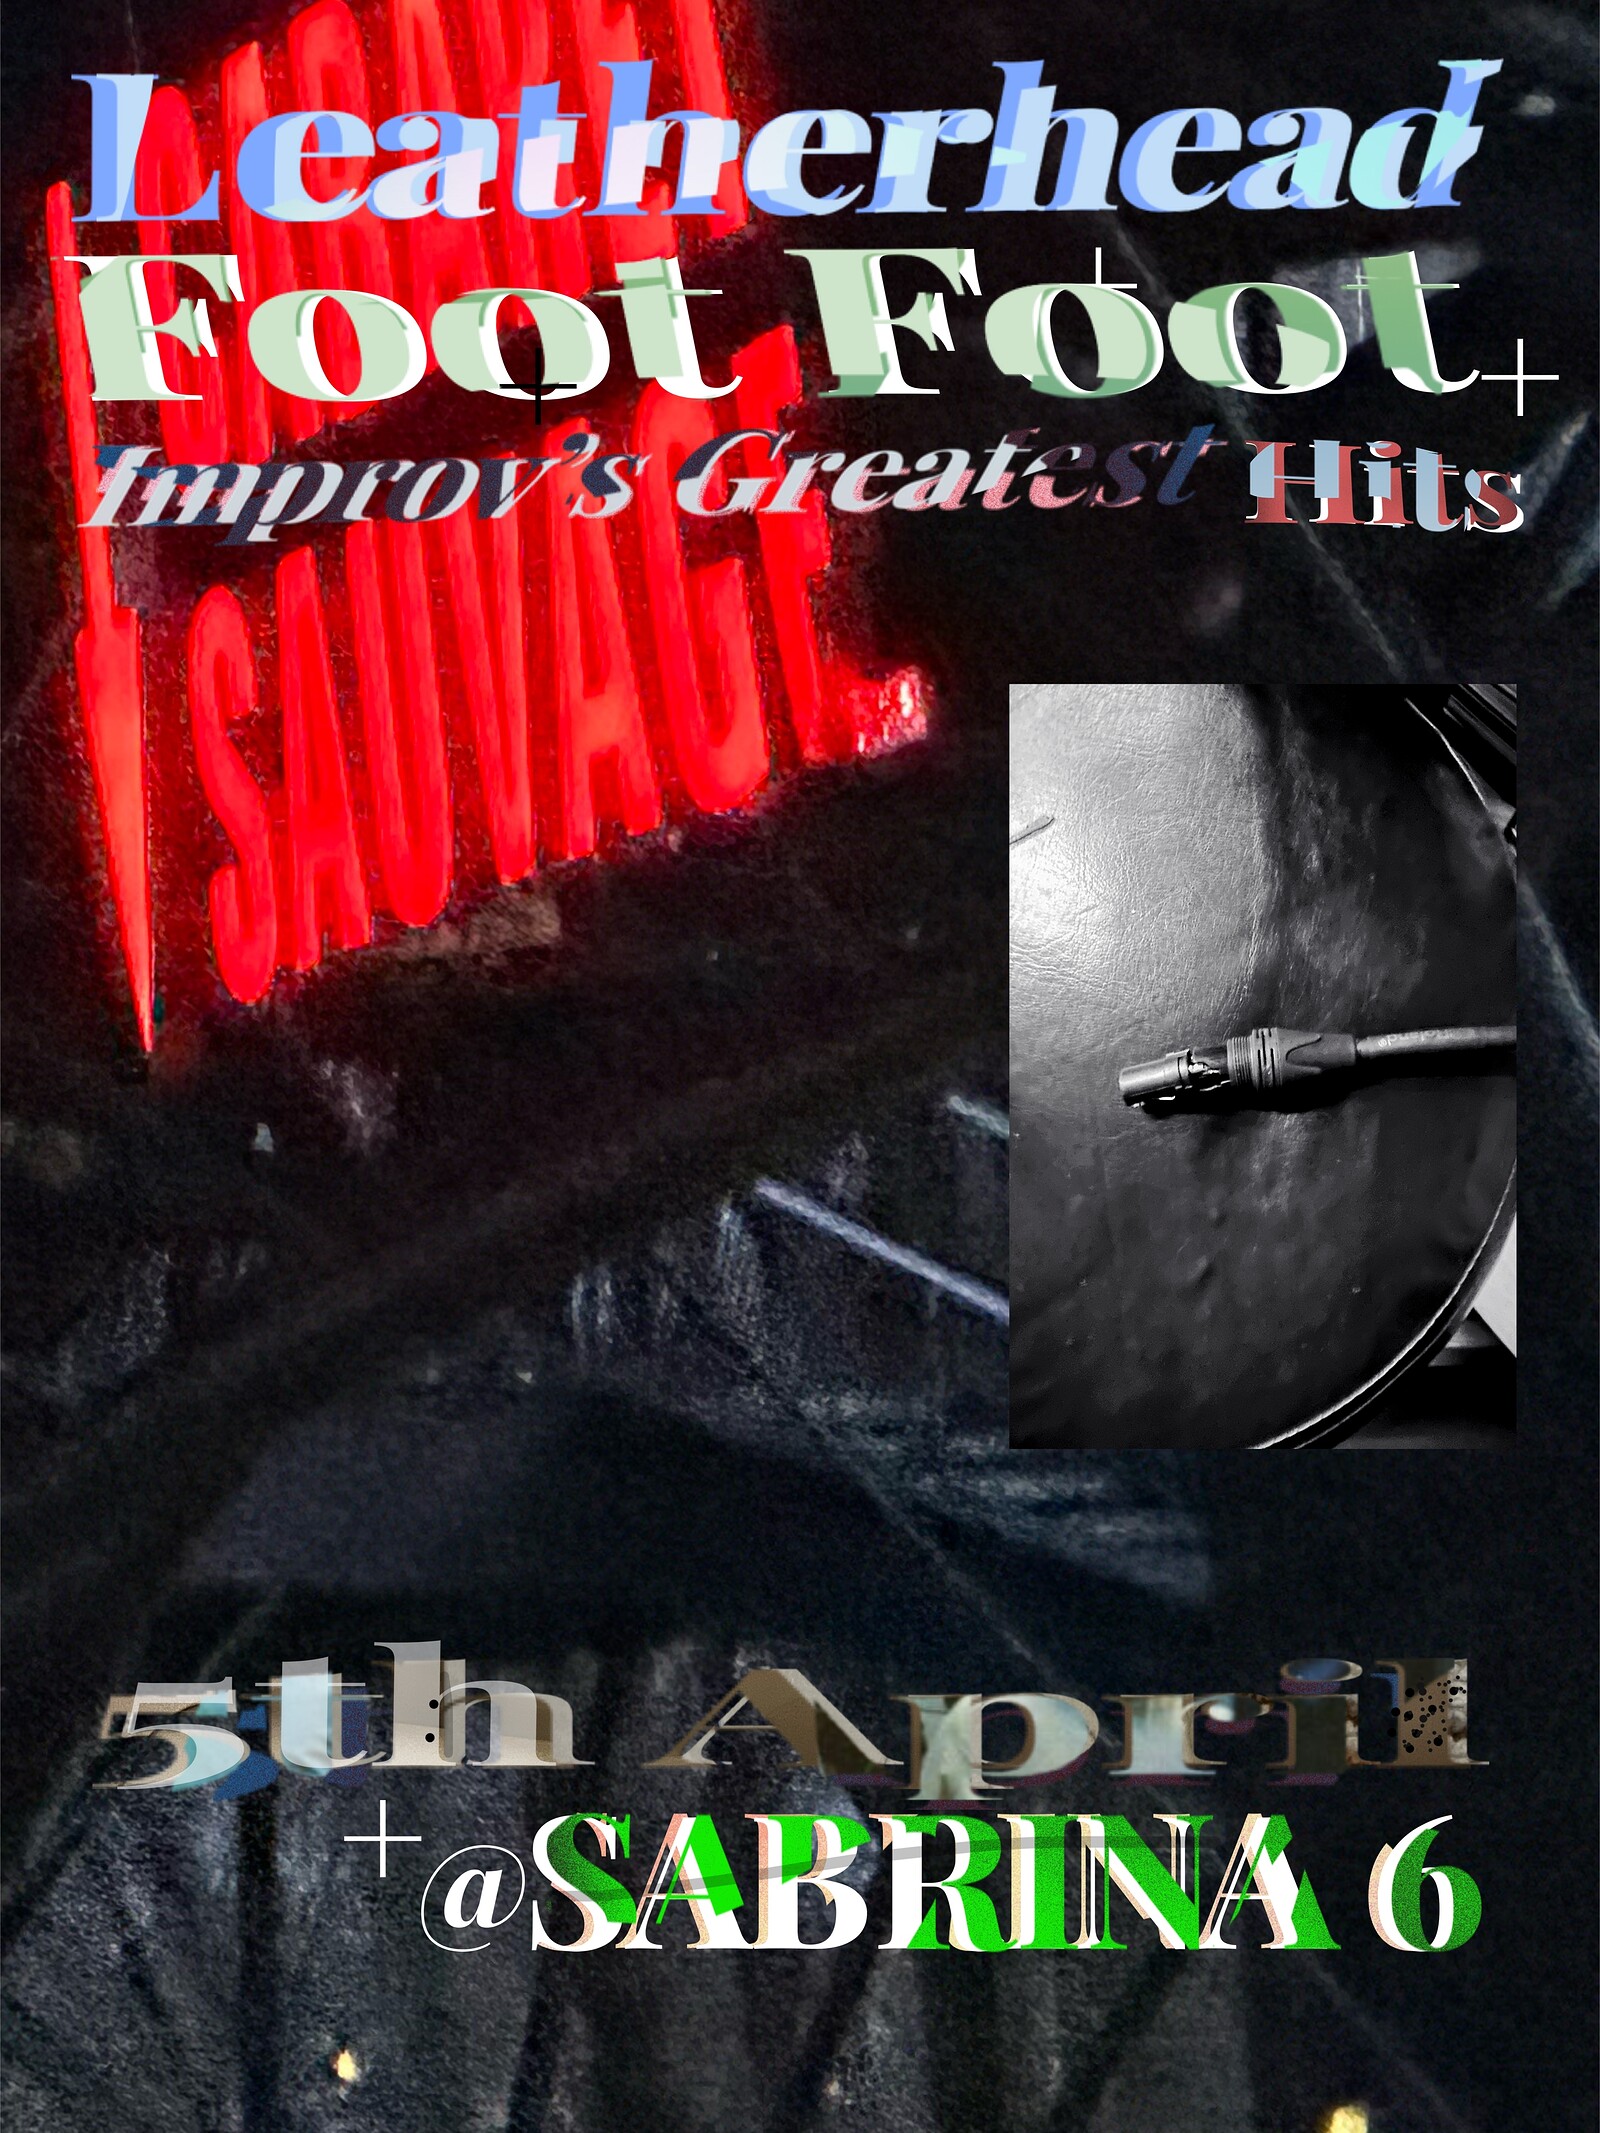 Leather.head / Foot Foot + Improv’s Greatest Hits at Bristol Cruising Club Sabrina 6